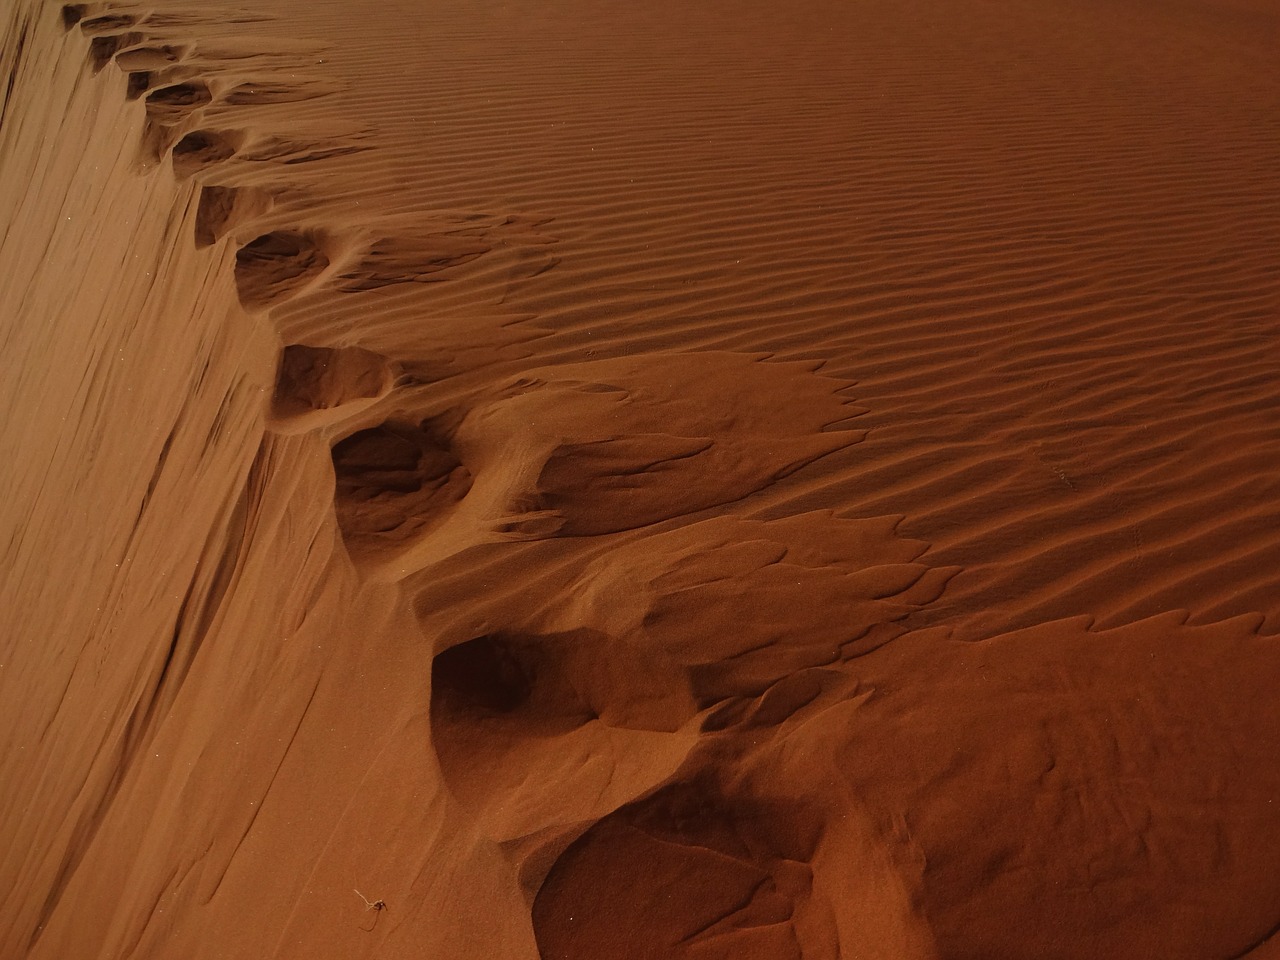 desert dune footprints free photo